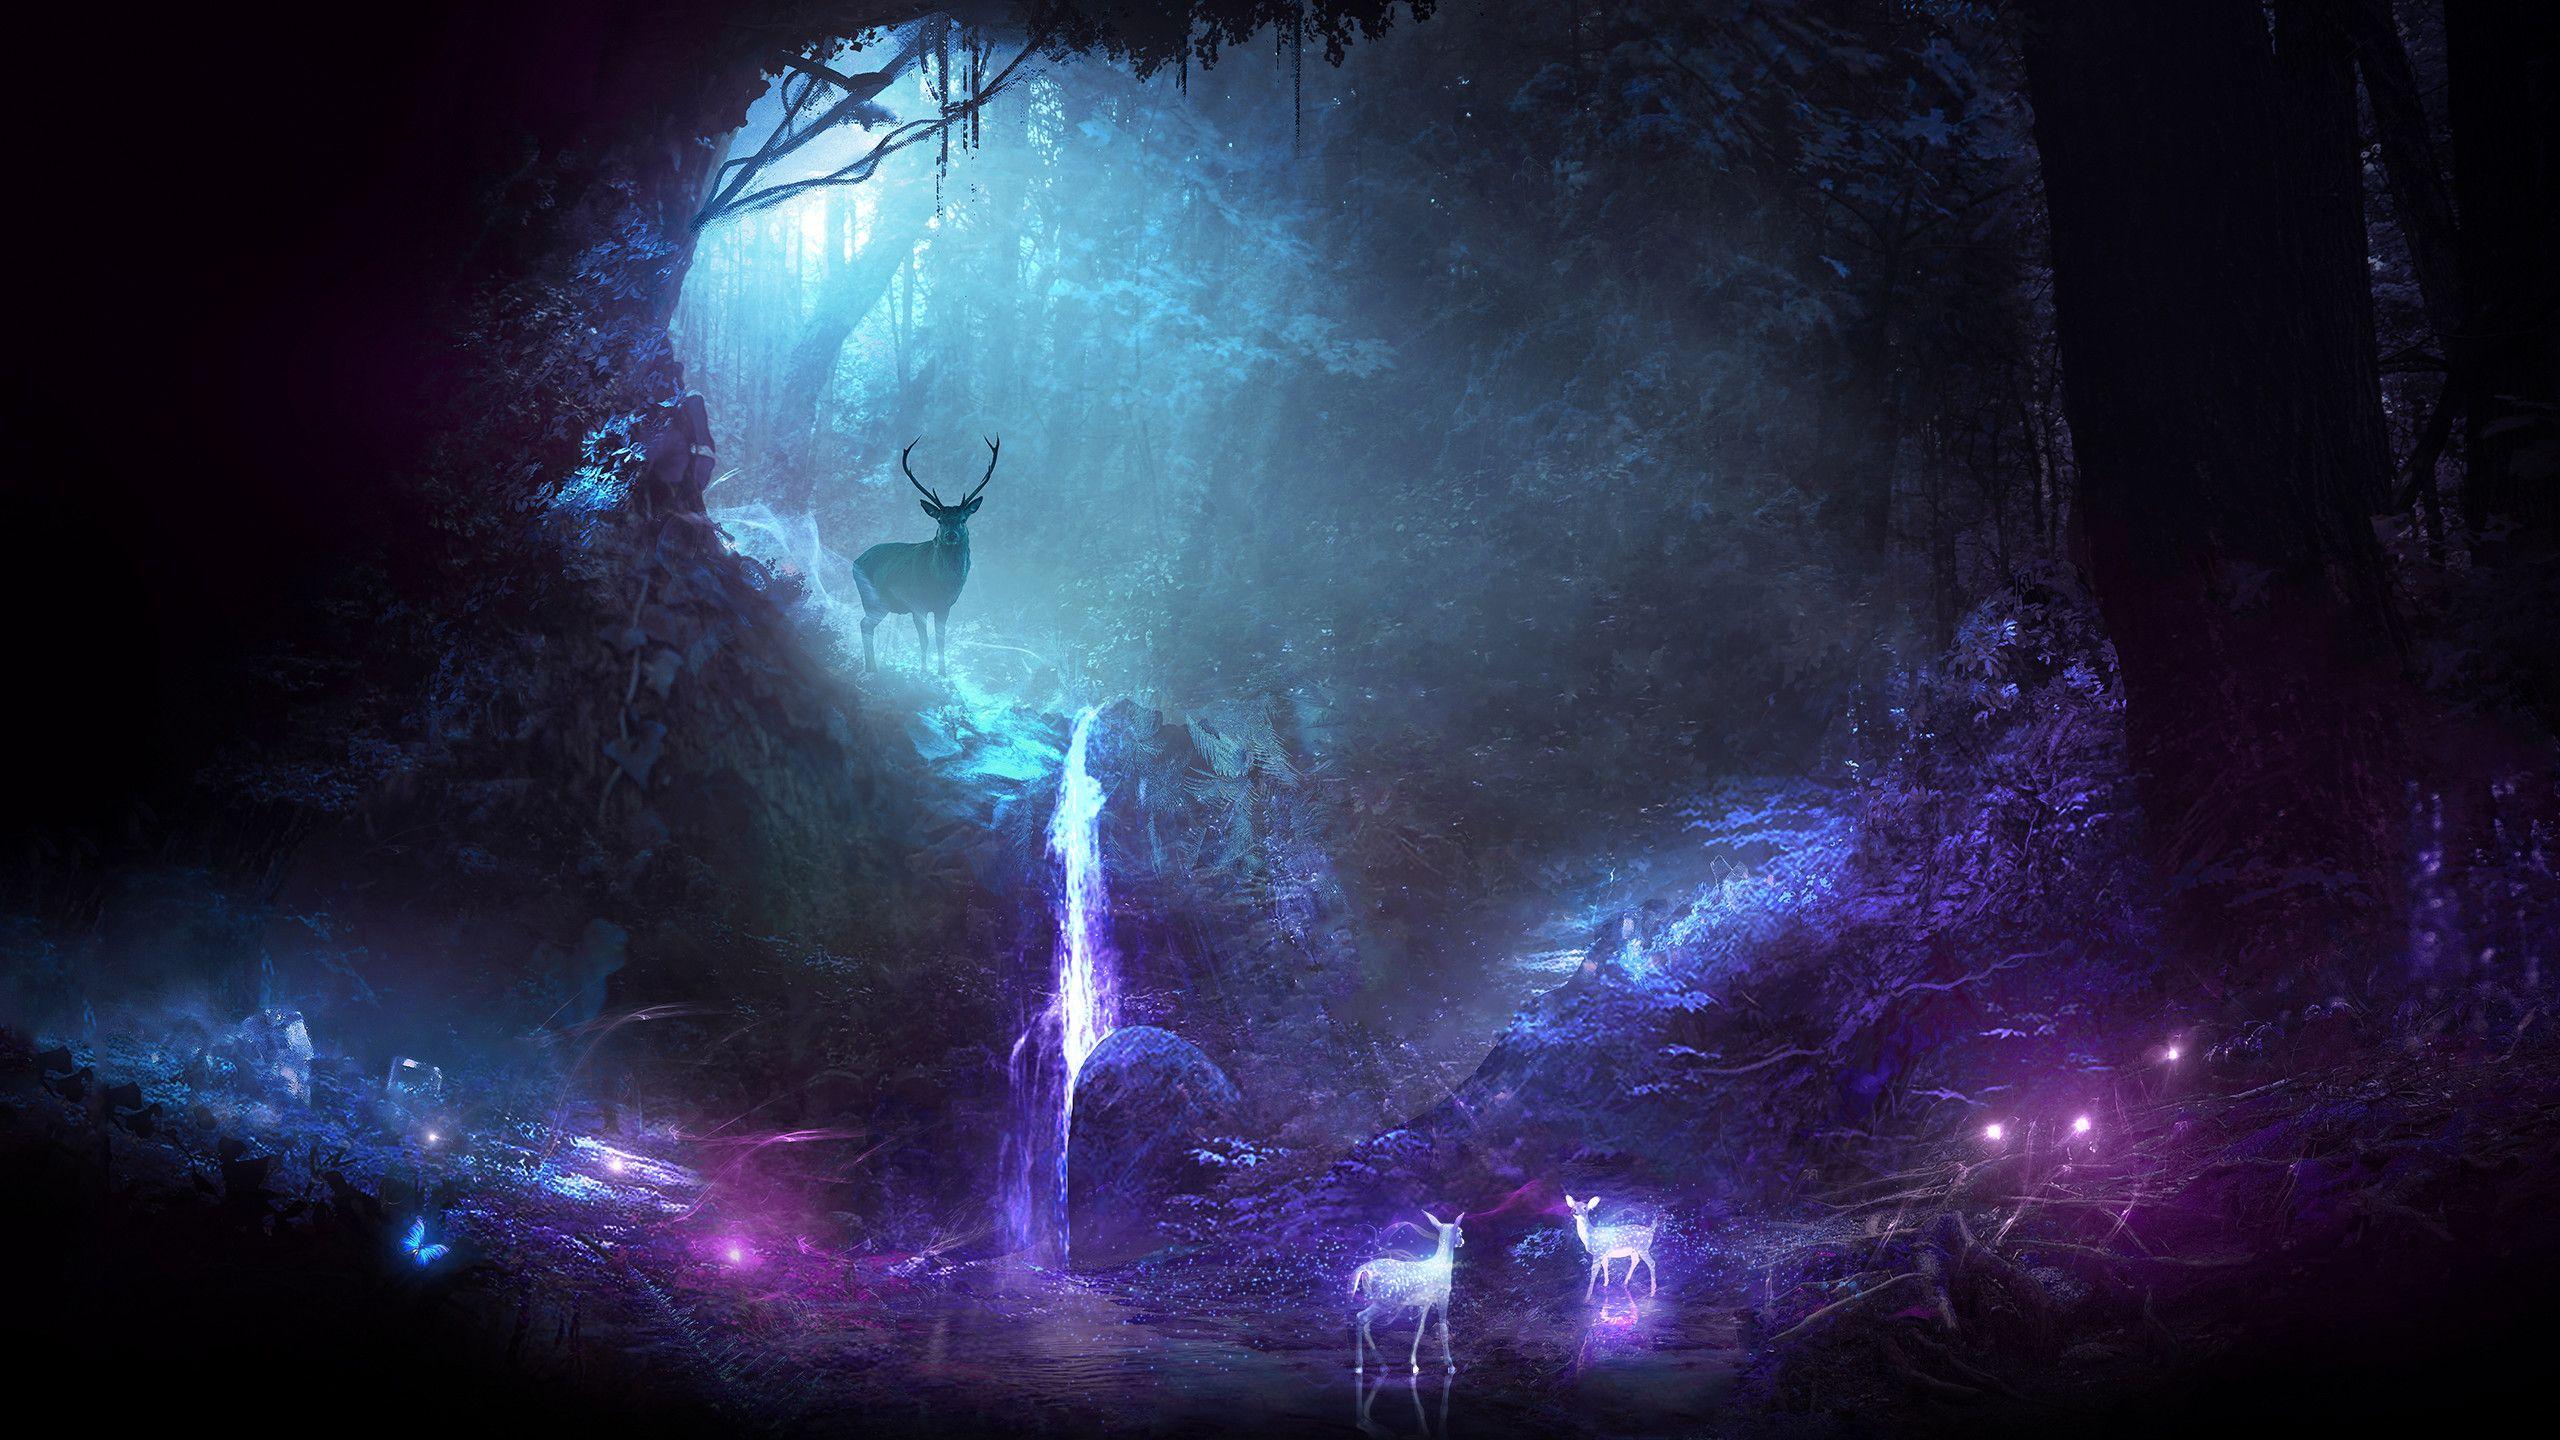 Download 2560x1440 Wallpaper Deer, Fantasy, Spirit, Forest